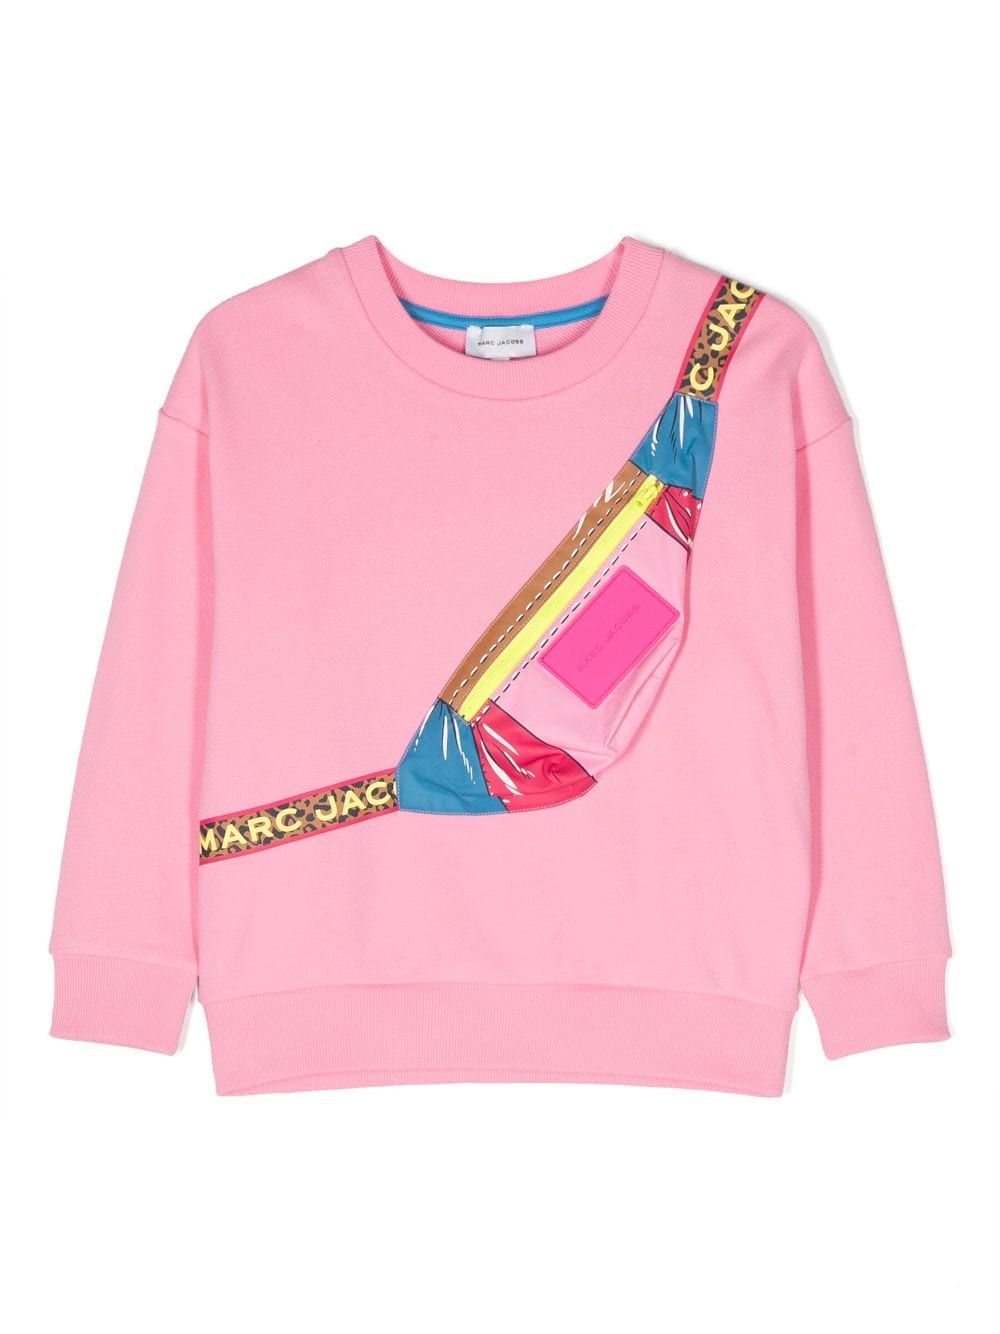 Little Marc Jacobs LS Zip Fanny Pack Print  Sweatshirt